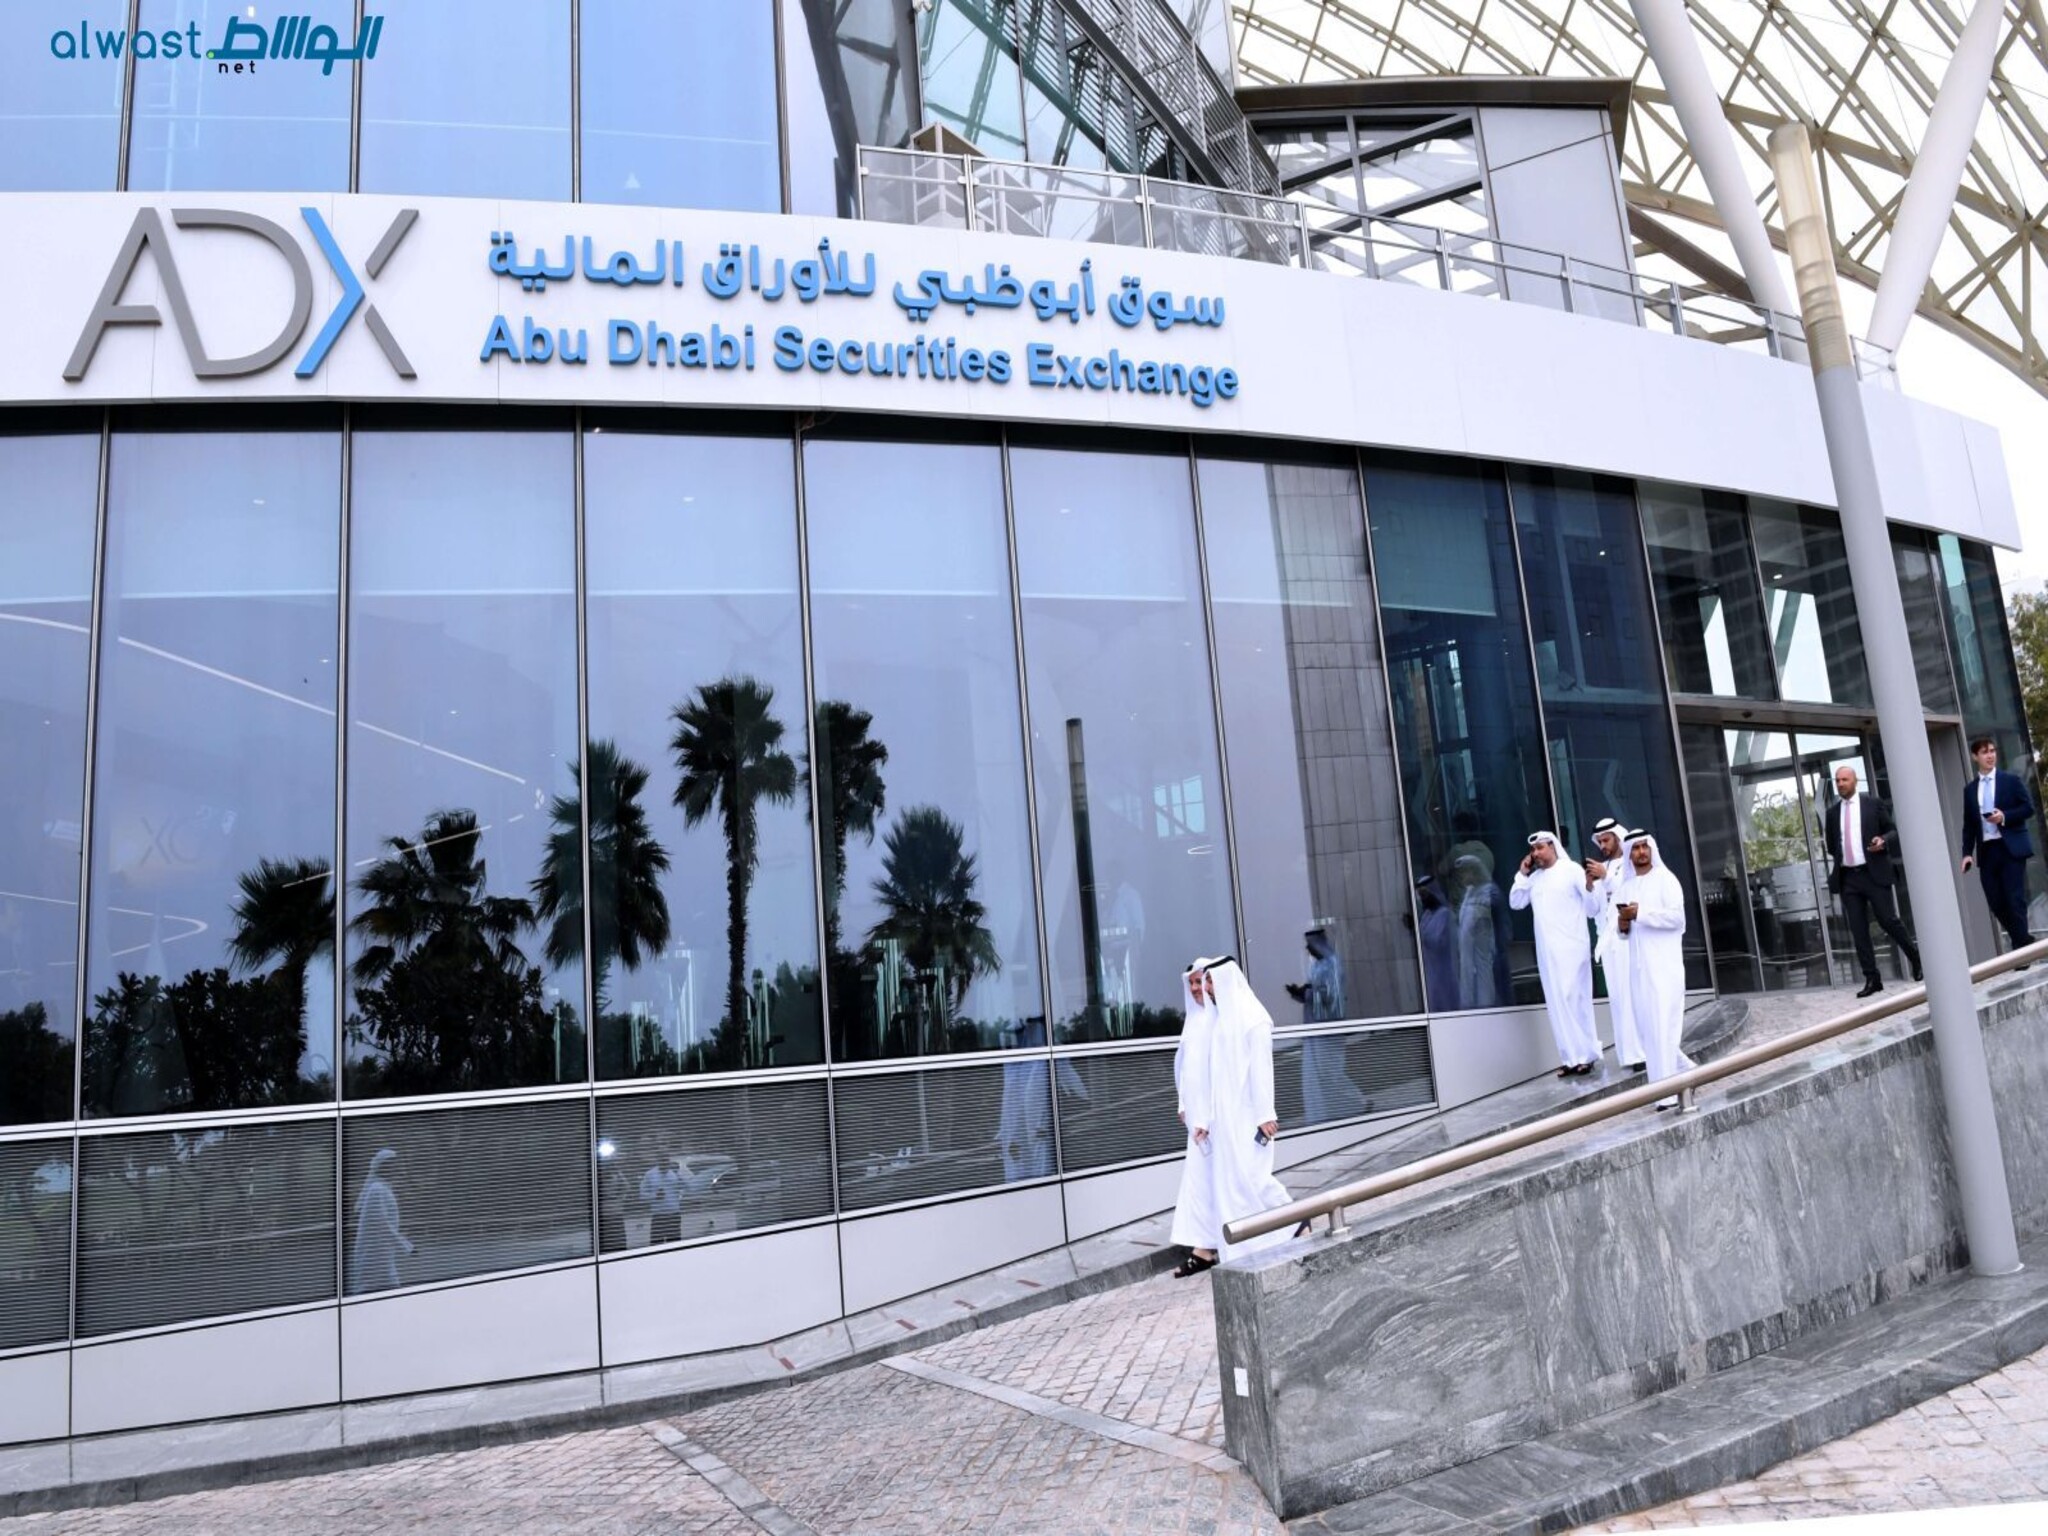 Abu Dhabi Taqa Launches $1.5bn Dual-Tranche Bonds on ADX